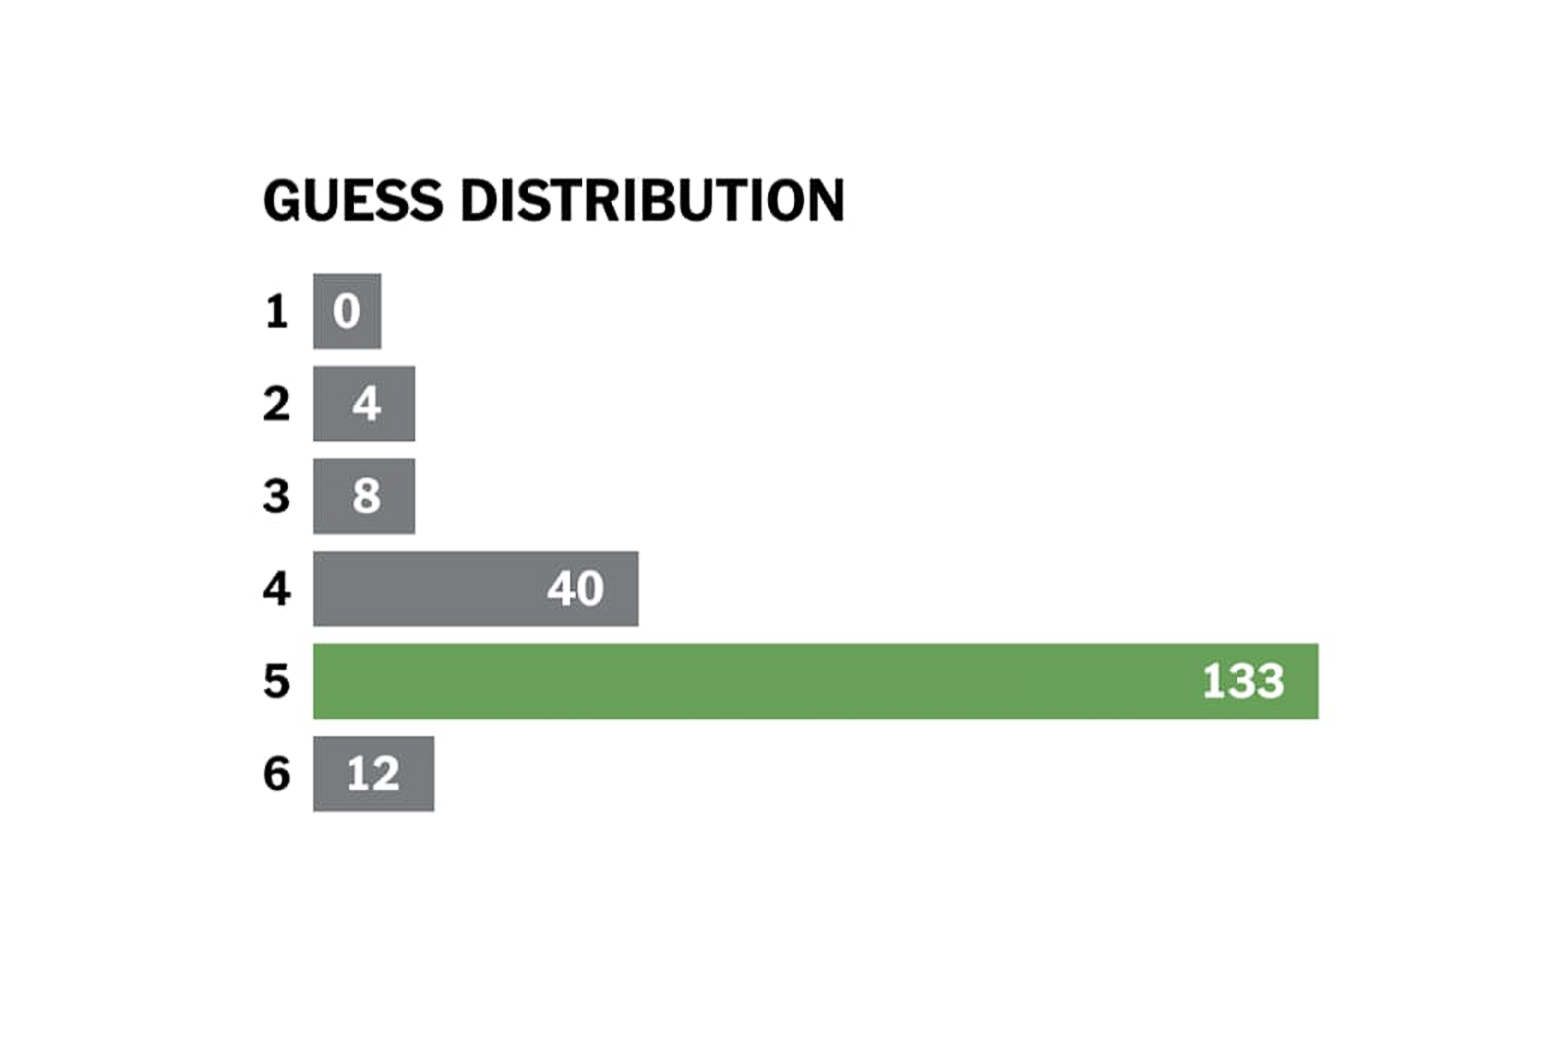 The distribution of winnings 